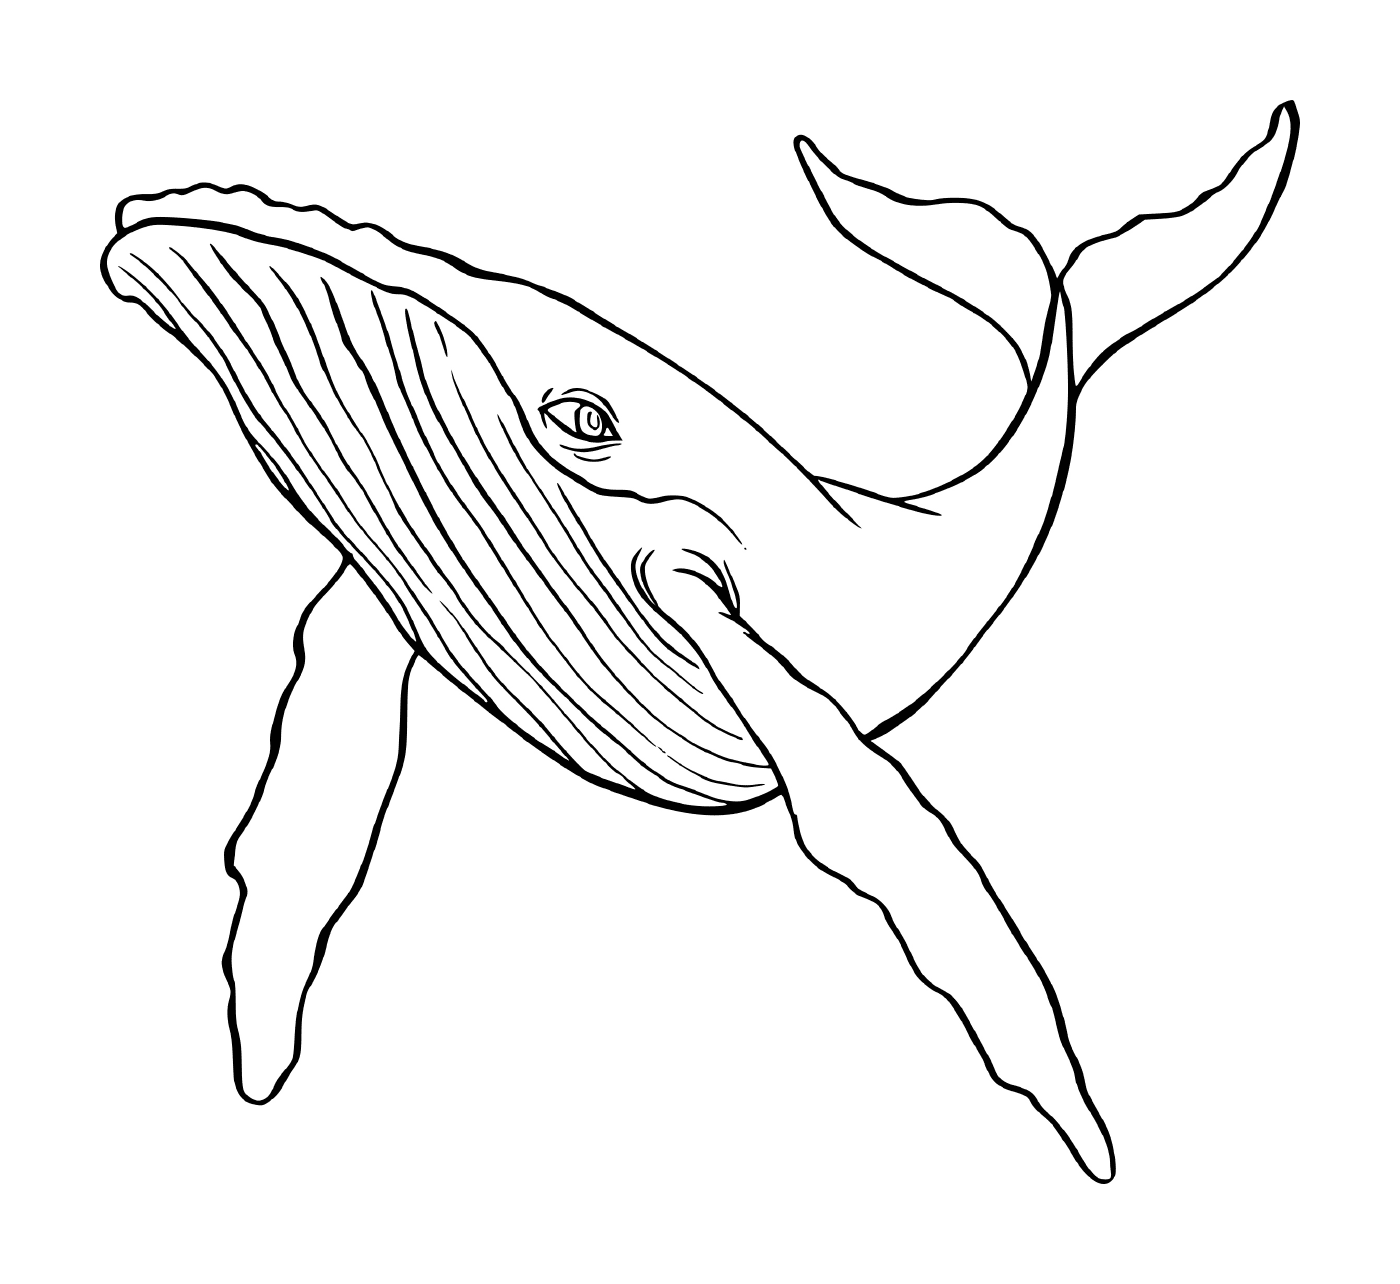  una ballena jorobada 